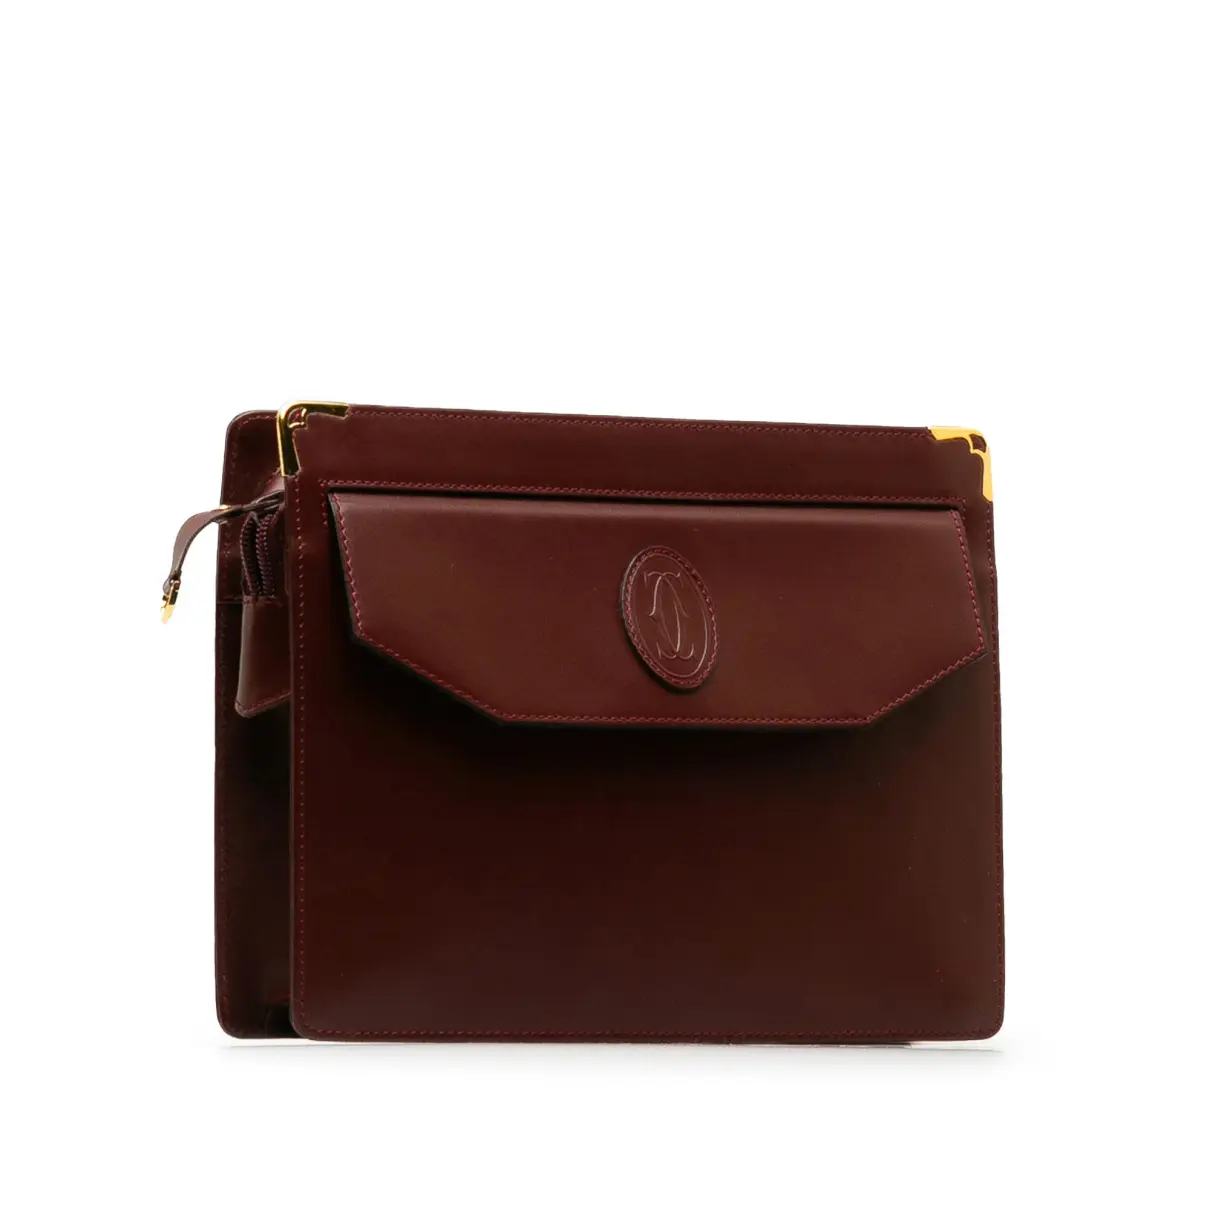 Buy Cartier Leather clutch bag online